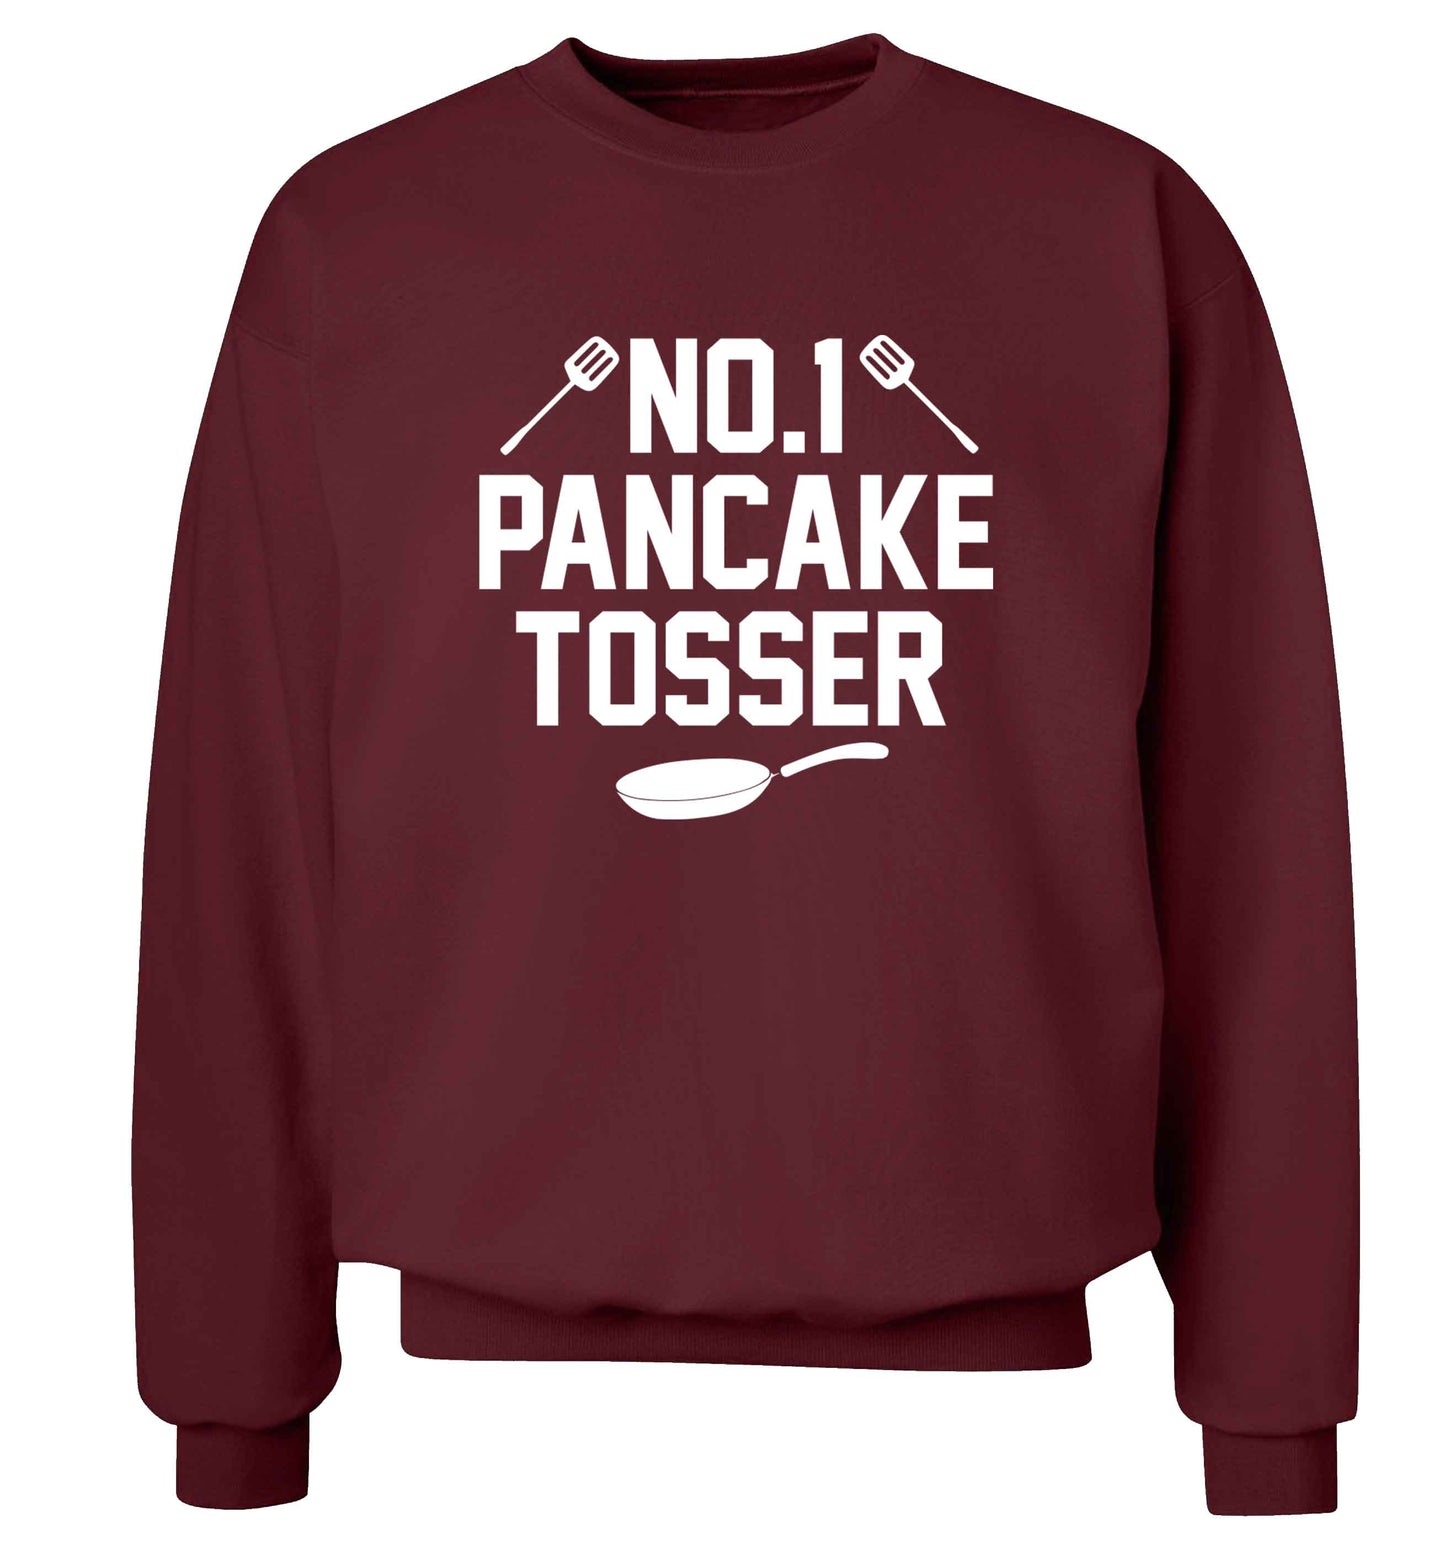 No.1 Pancake tosser adult's unisex maroon sweater 2XL